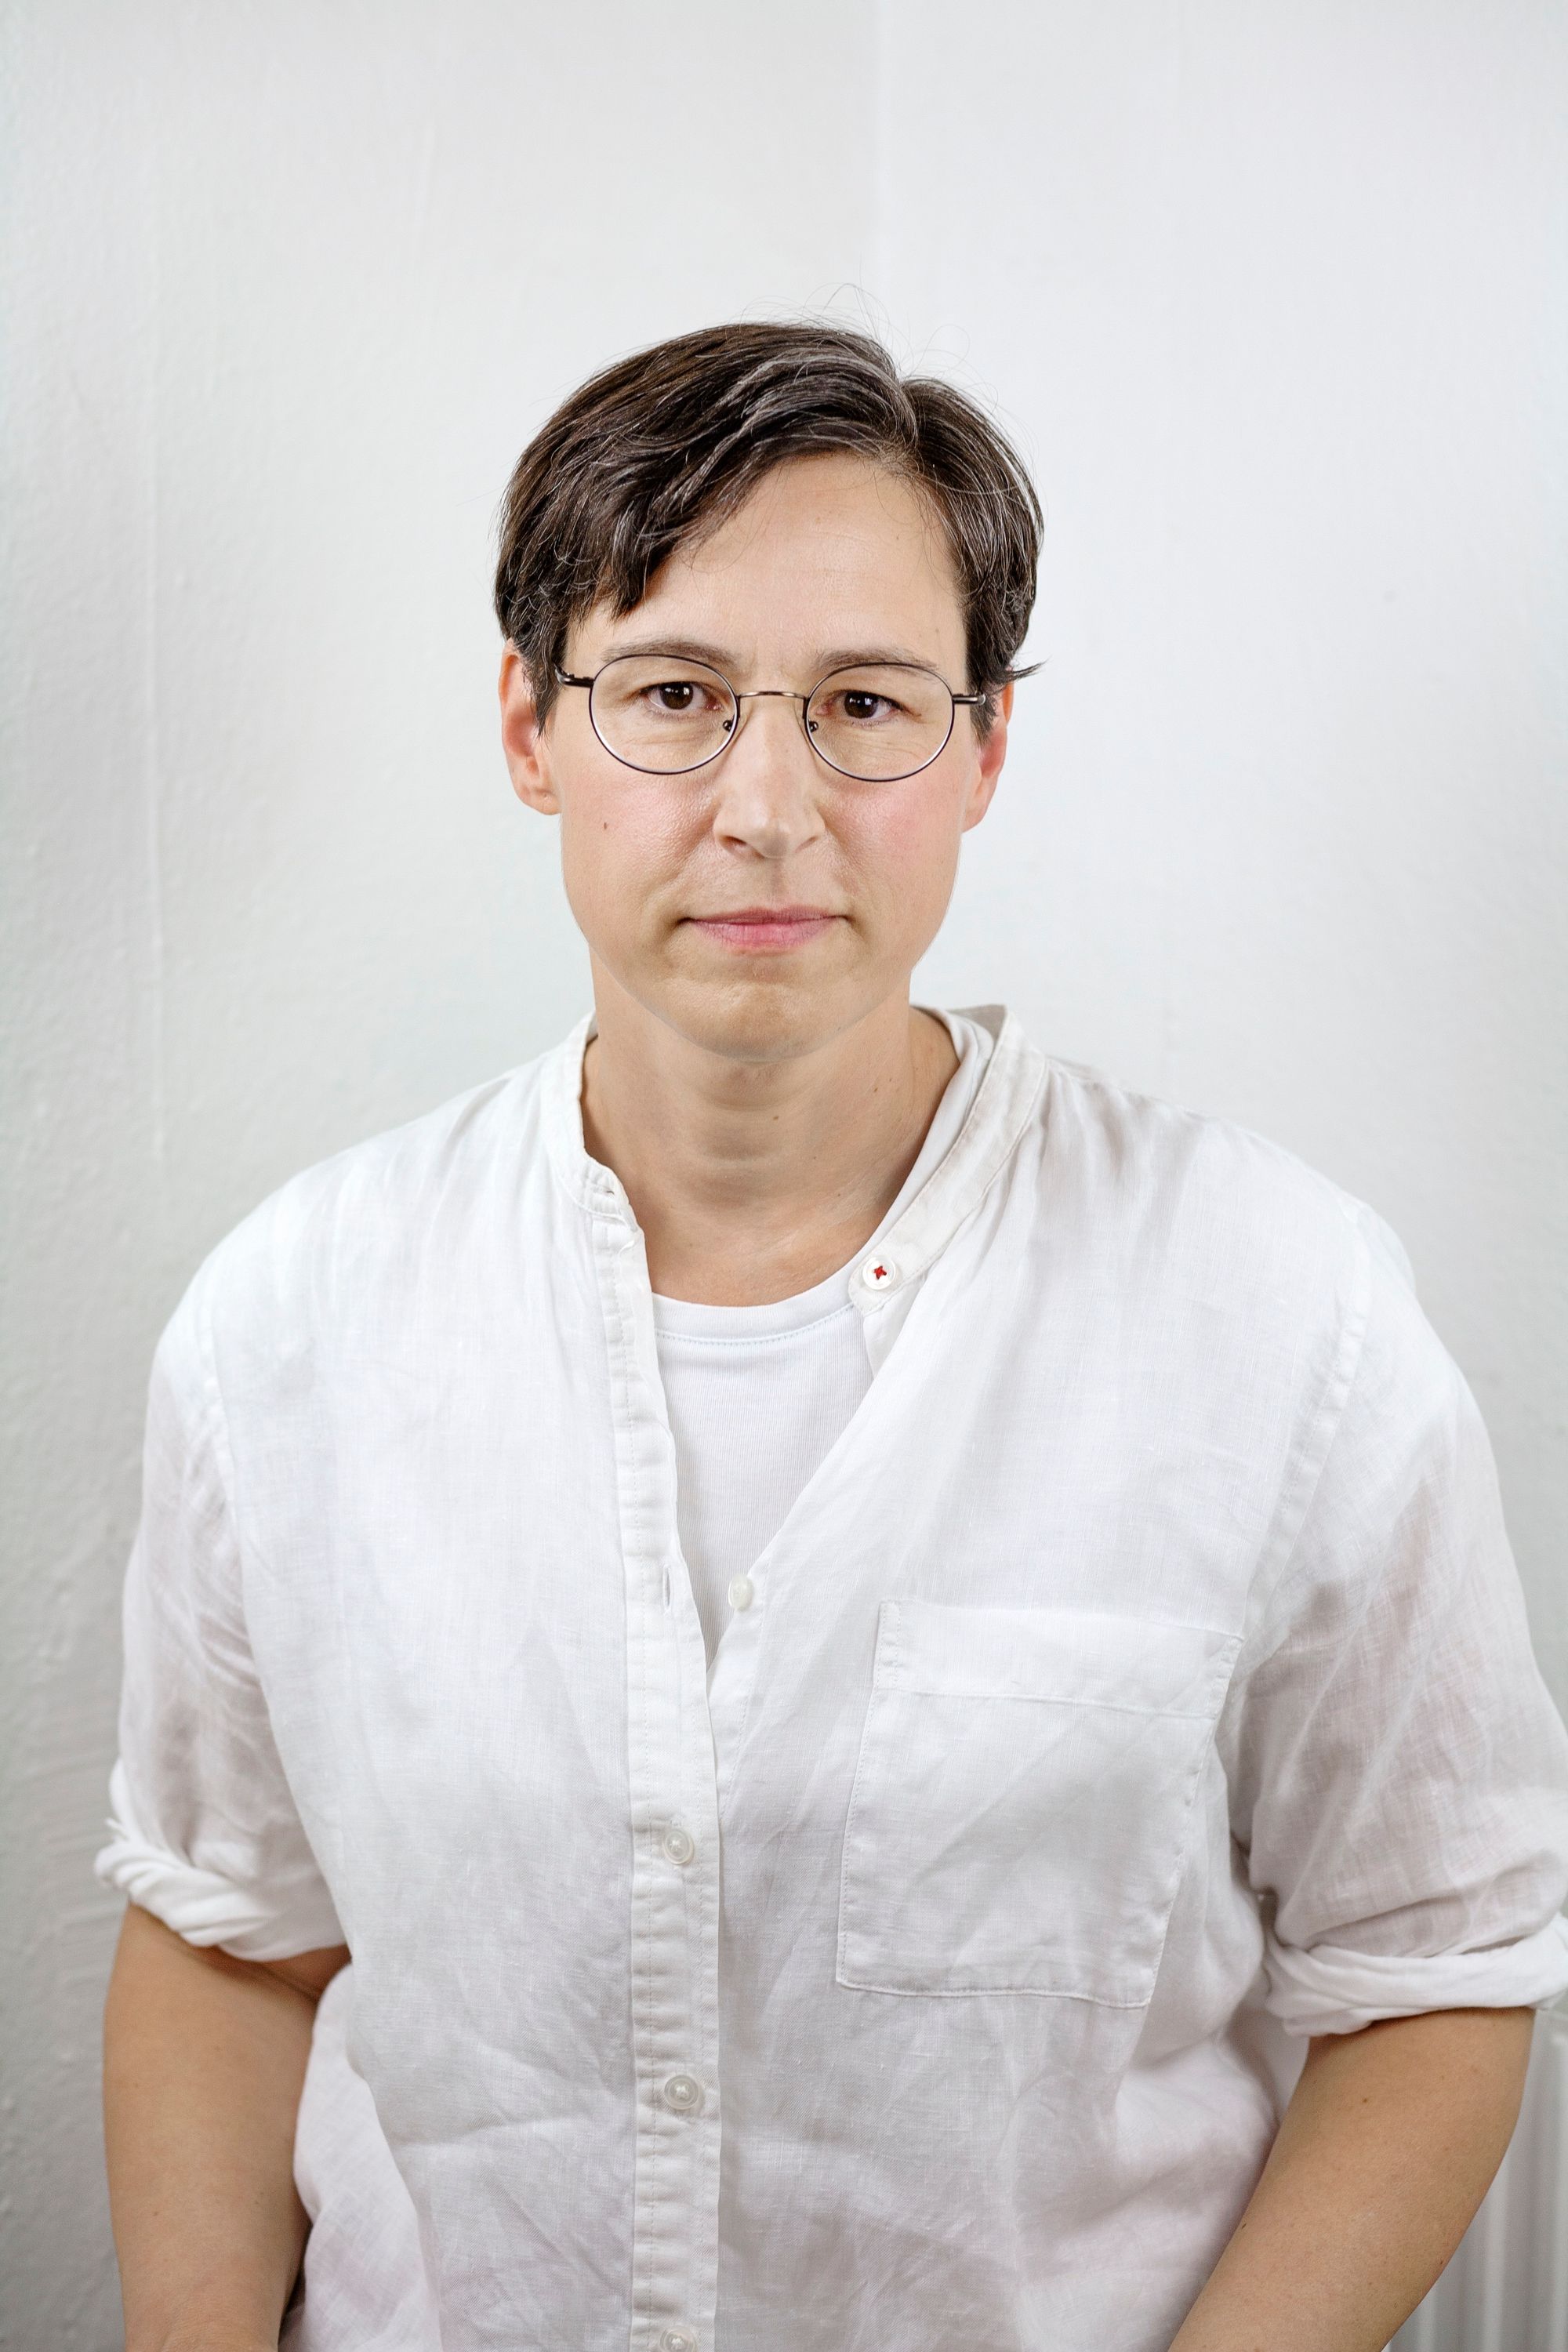 Eva Ribich